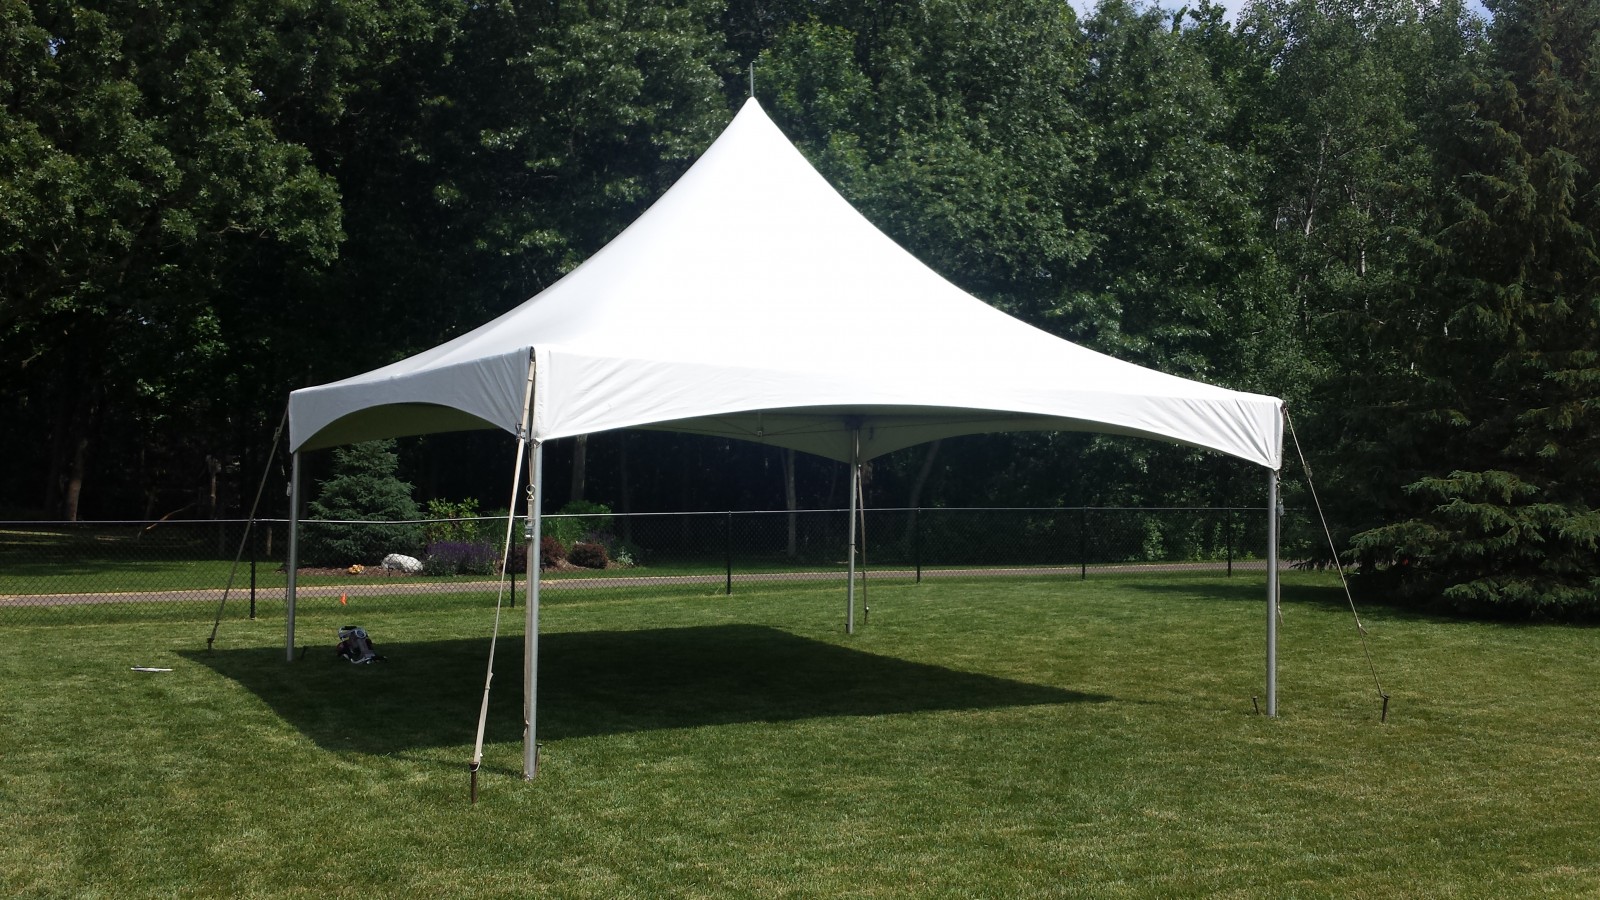 20' x 20' high peak tent rental for backyard graduation parties in Minnesota